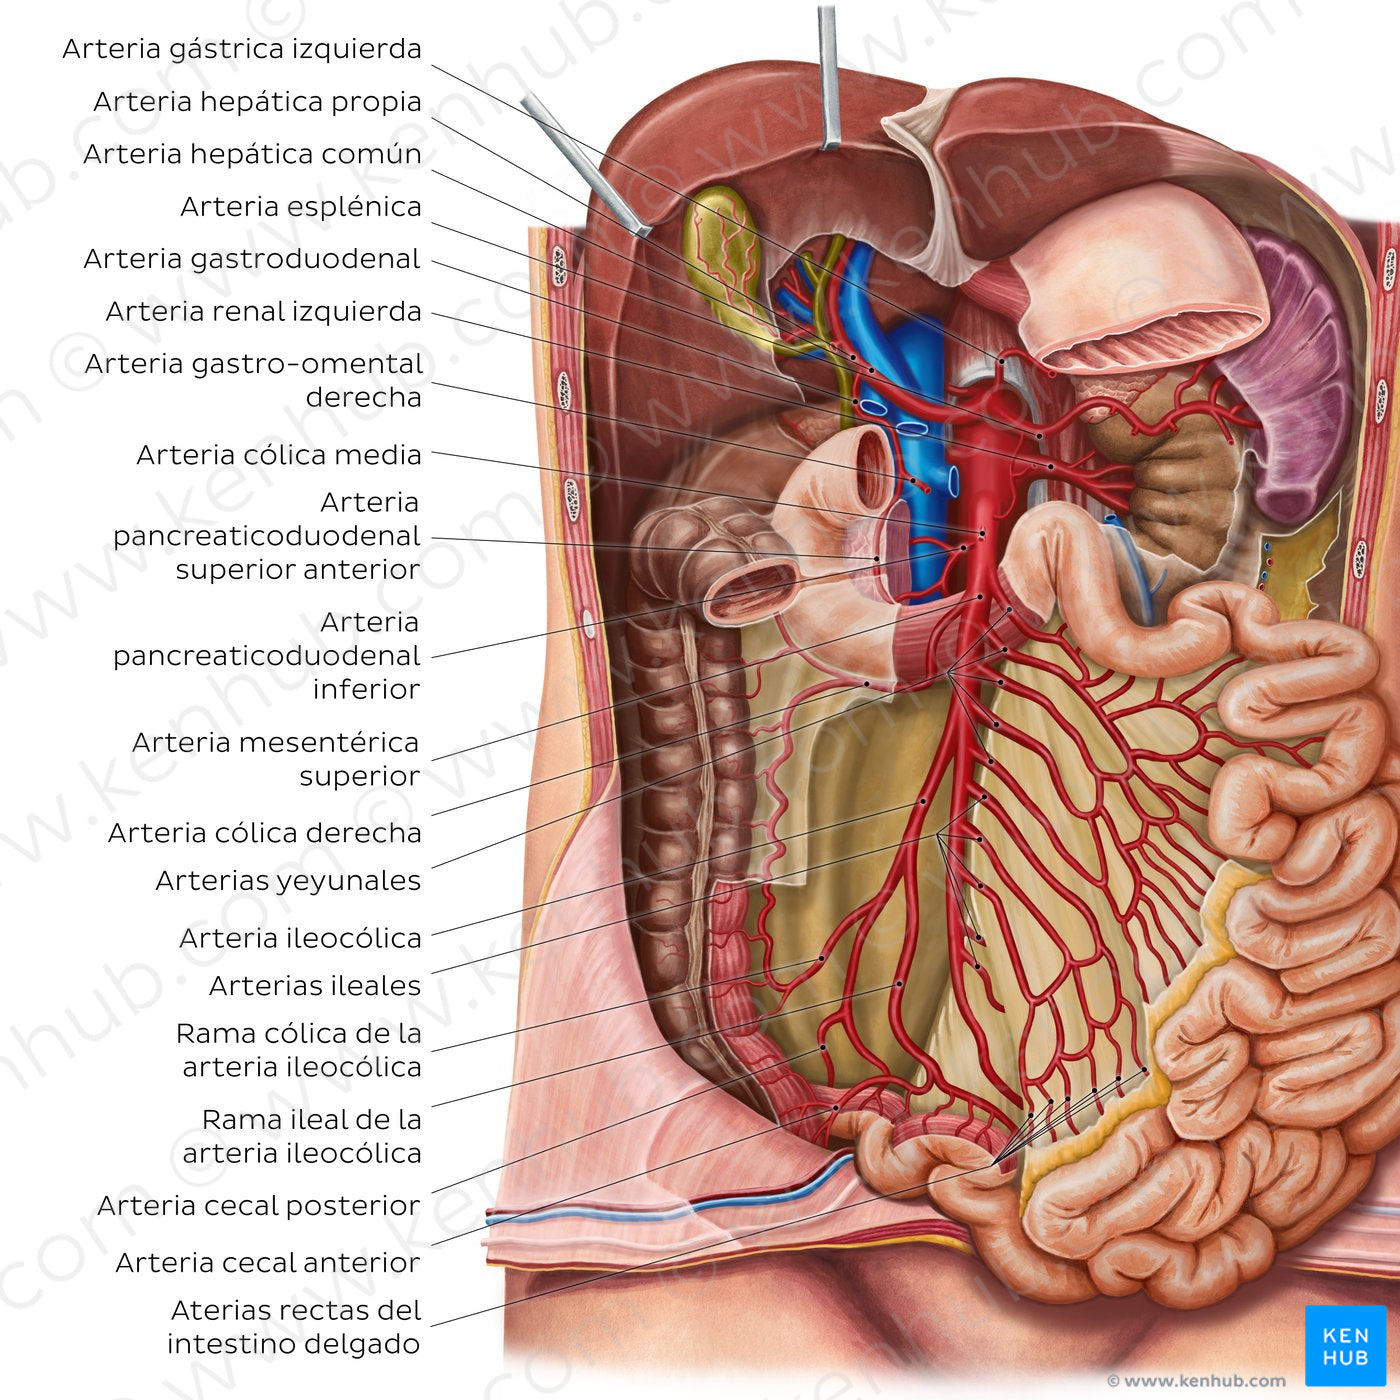 Arteries of the small intestine (Spanish)